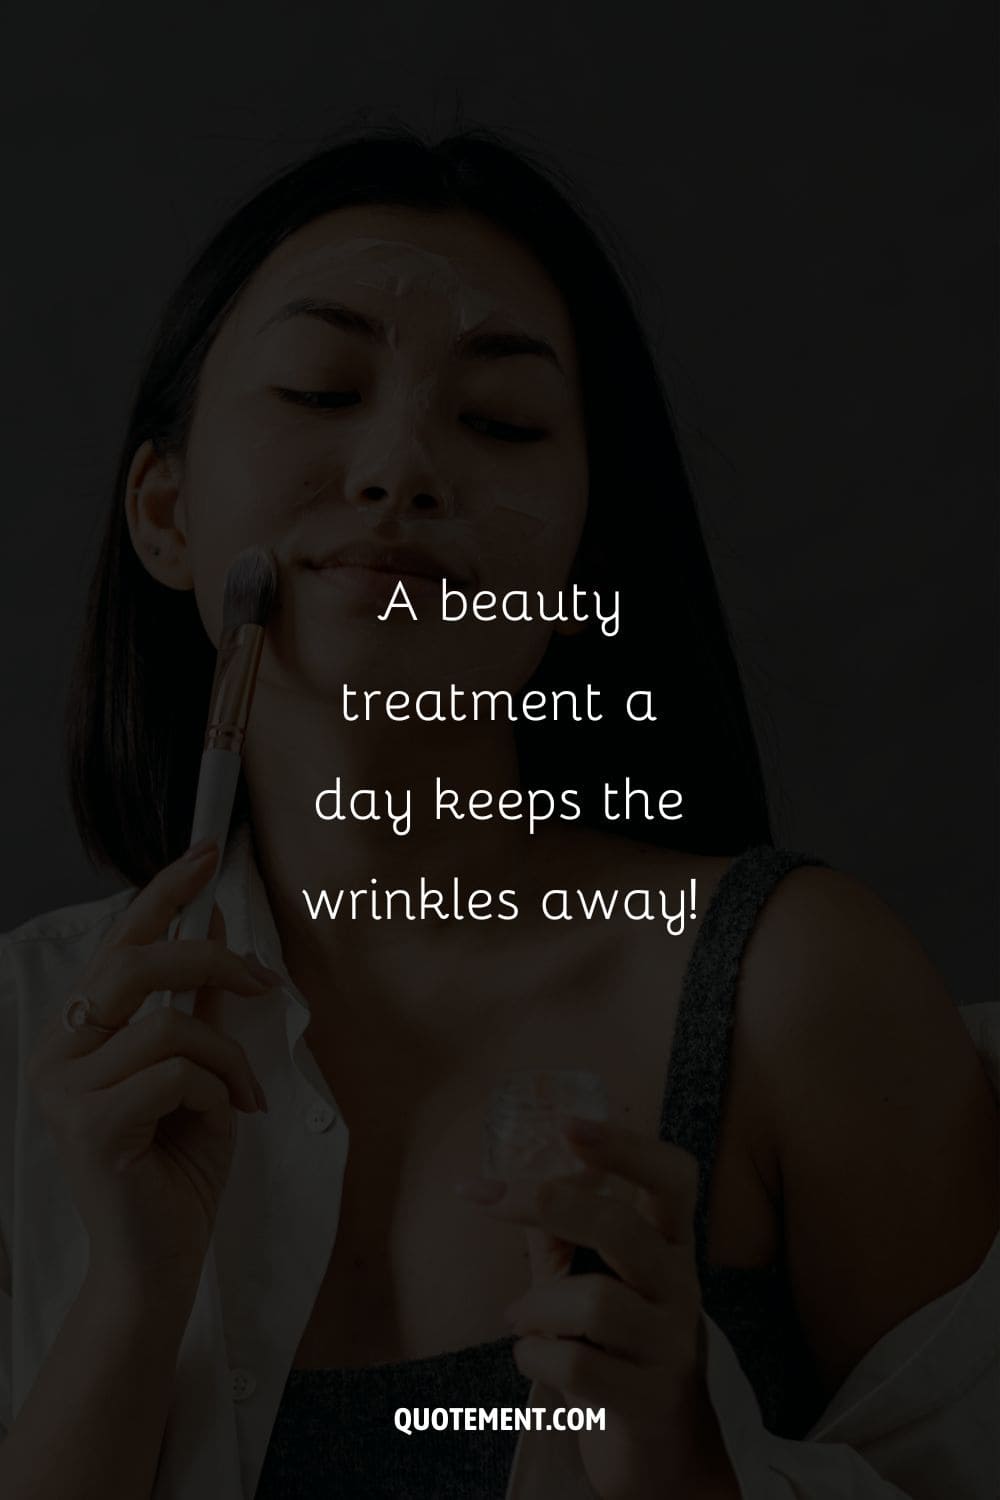 A beauty treatment a day keeps the wrinkles away!